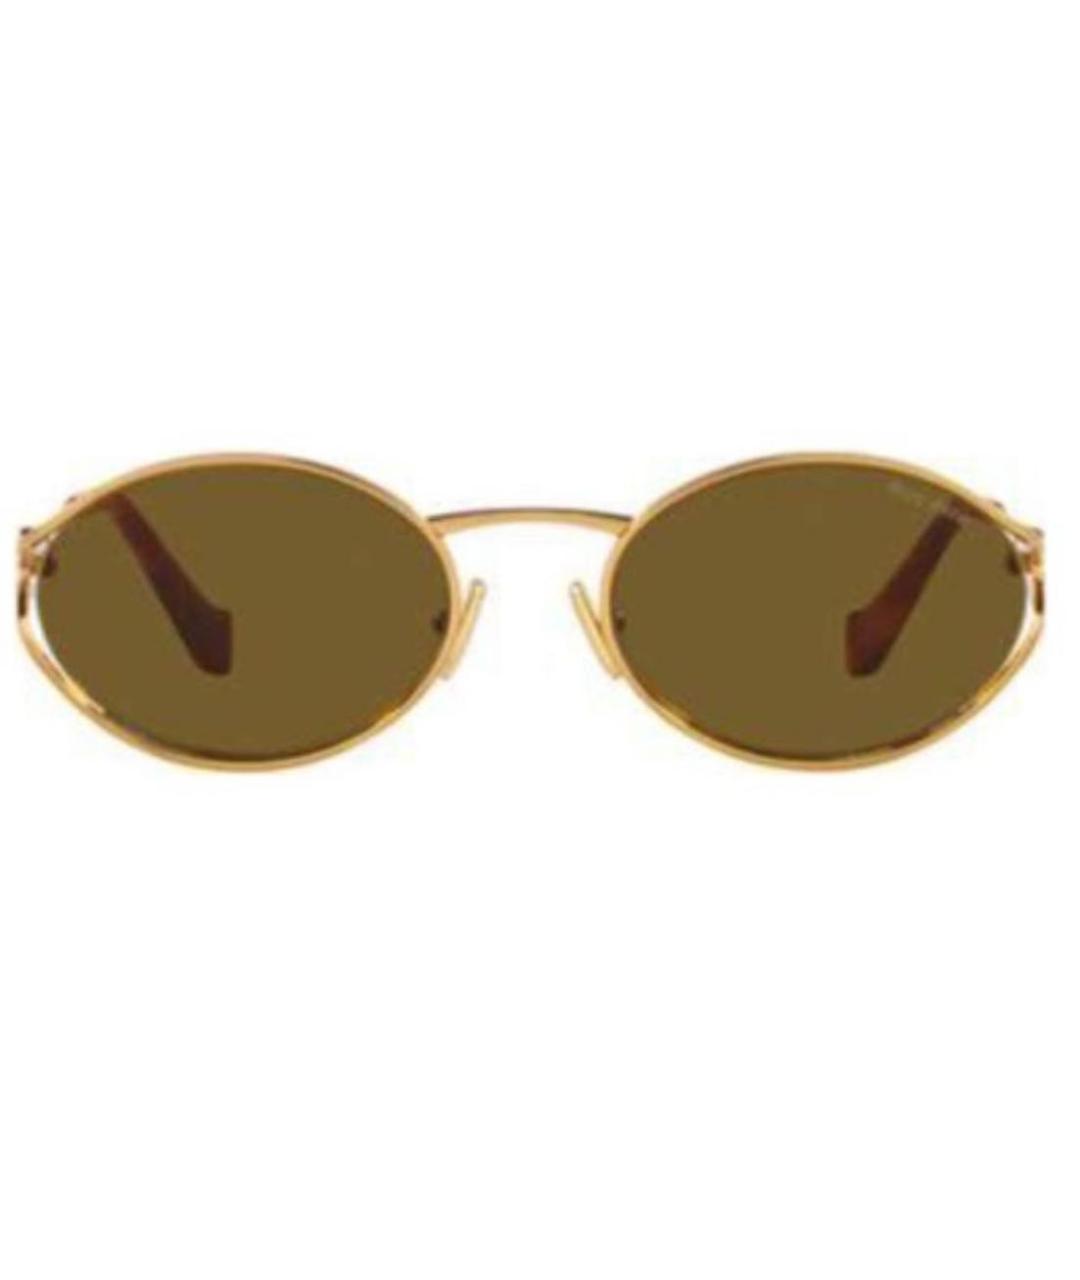 MIU MIU Золотые металлические солнцезащитные очки, фото 2